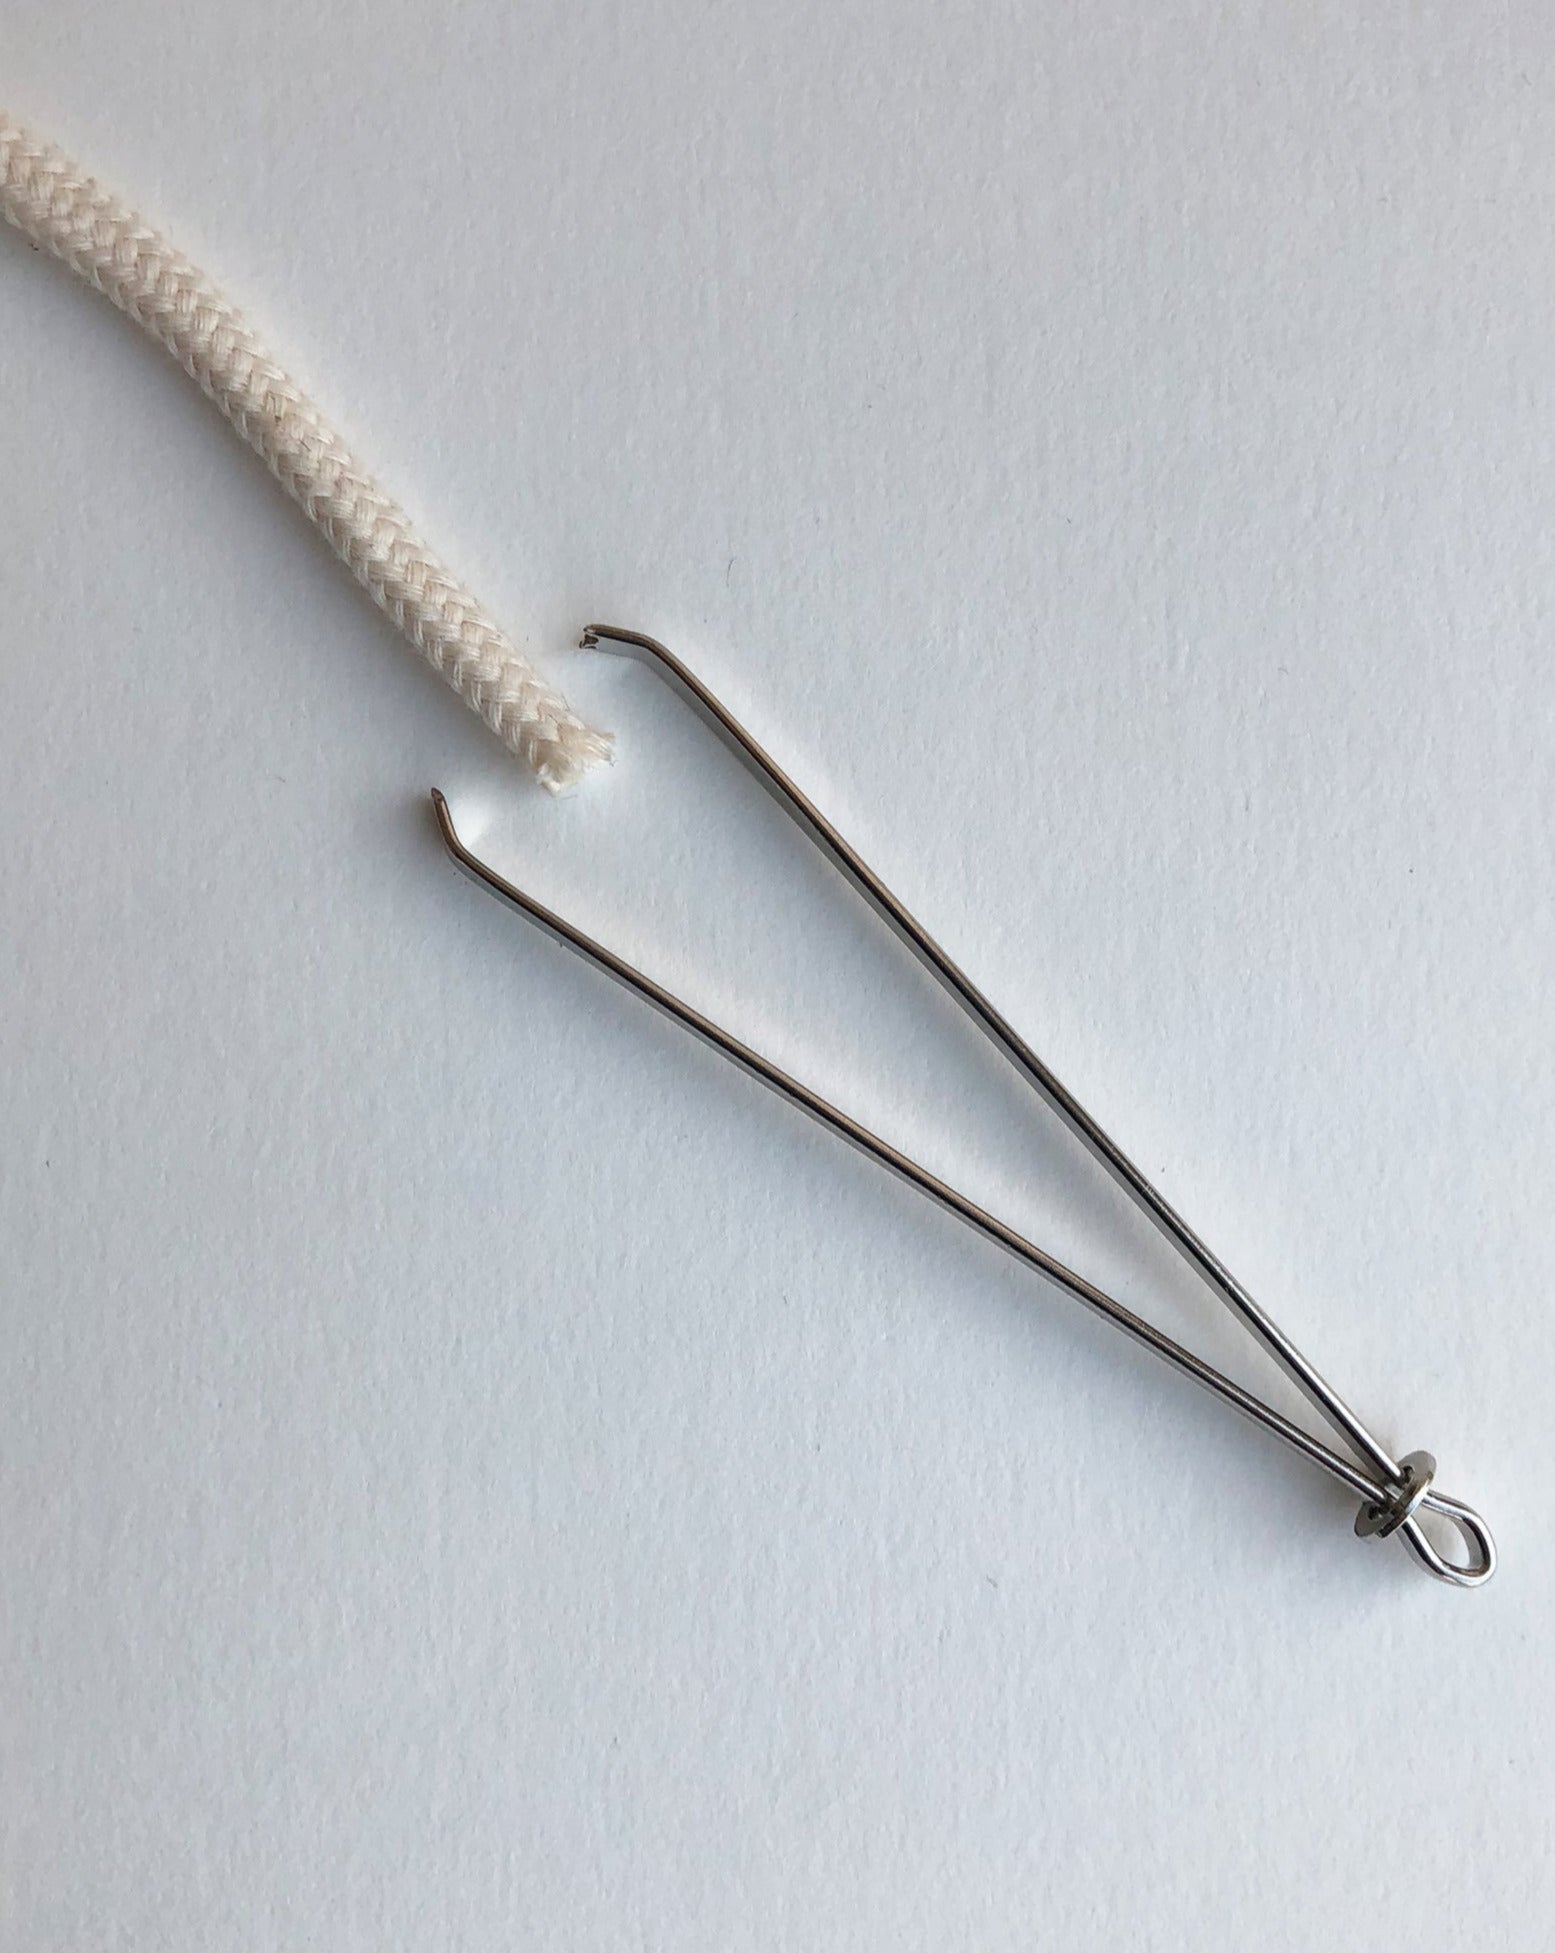 2 Pieces Bodkin Needles Threader Tweezers Insert Elastic Ribbon Easy Insert  into Casings Sewing Tools - AliExpress